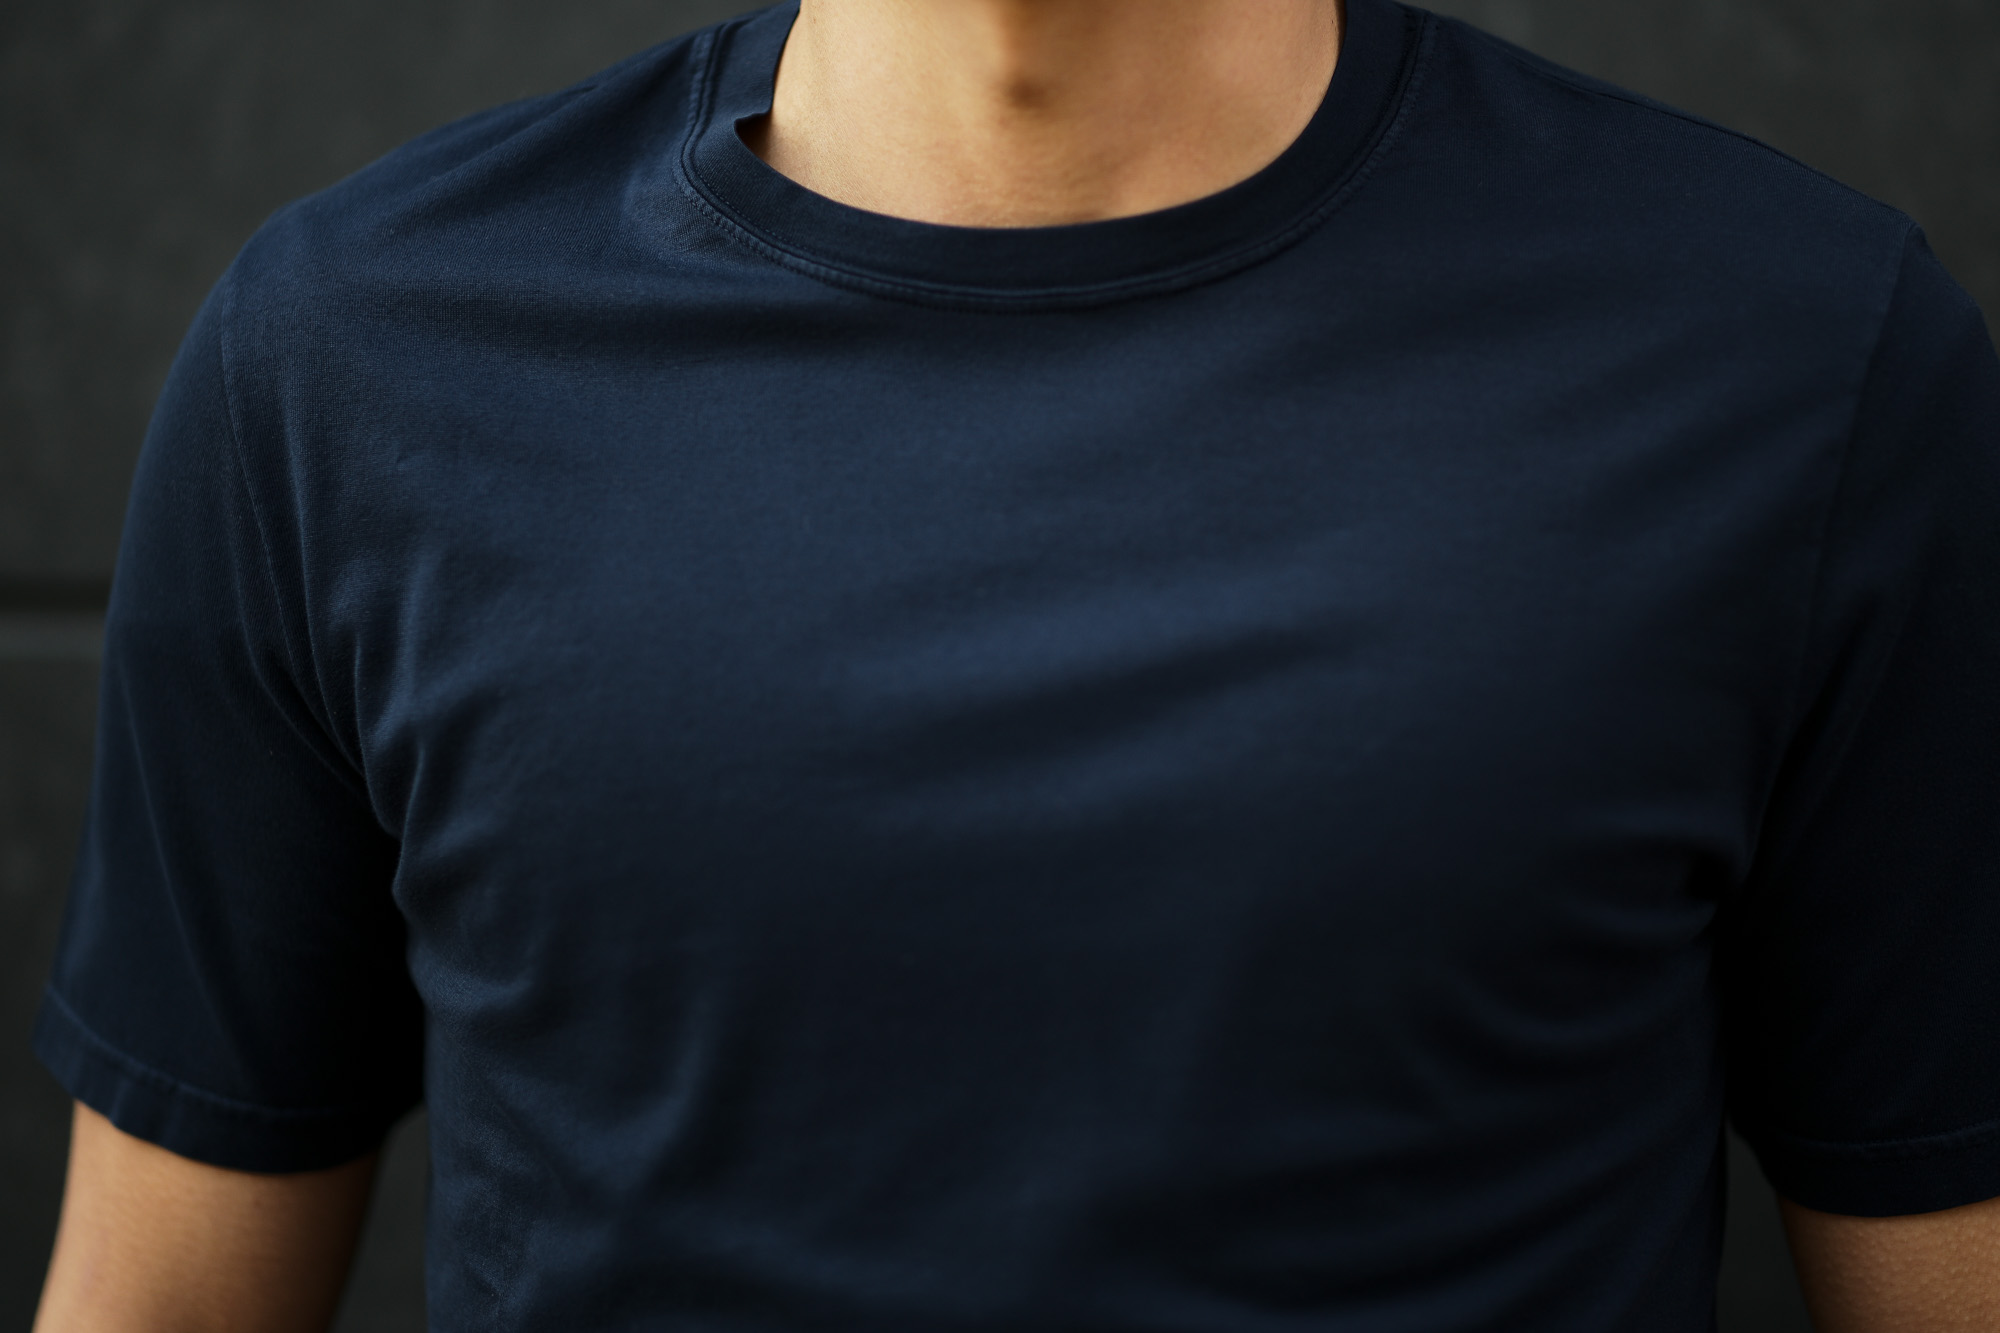 FEDELI(フェデーリ) Crew Neck T-shirt (クルーネック Tシャツ) ギザコットン Tシャツ NAVY (ネイビー・626) made in italy (イタリア製) 2020 春夏新作 愛知 名古屋 altoediritto アルトエデリット TEE